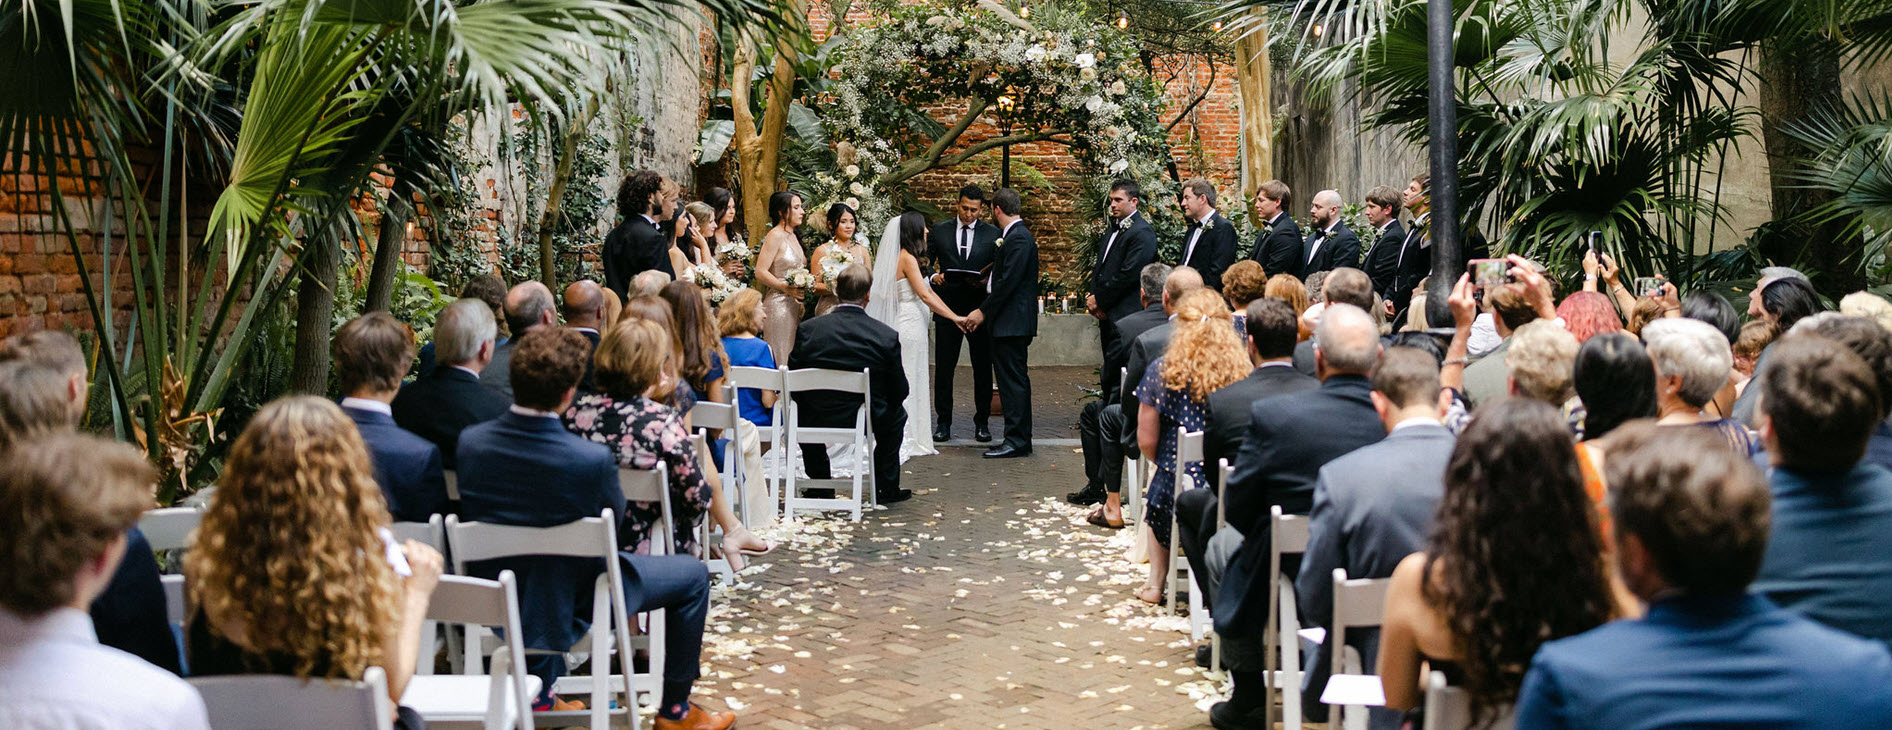 Wedding ceremony in a courtyard